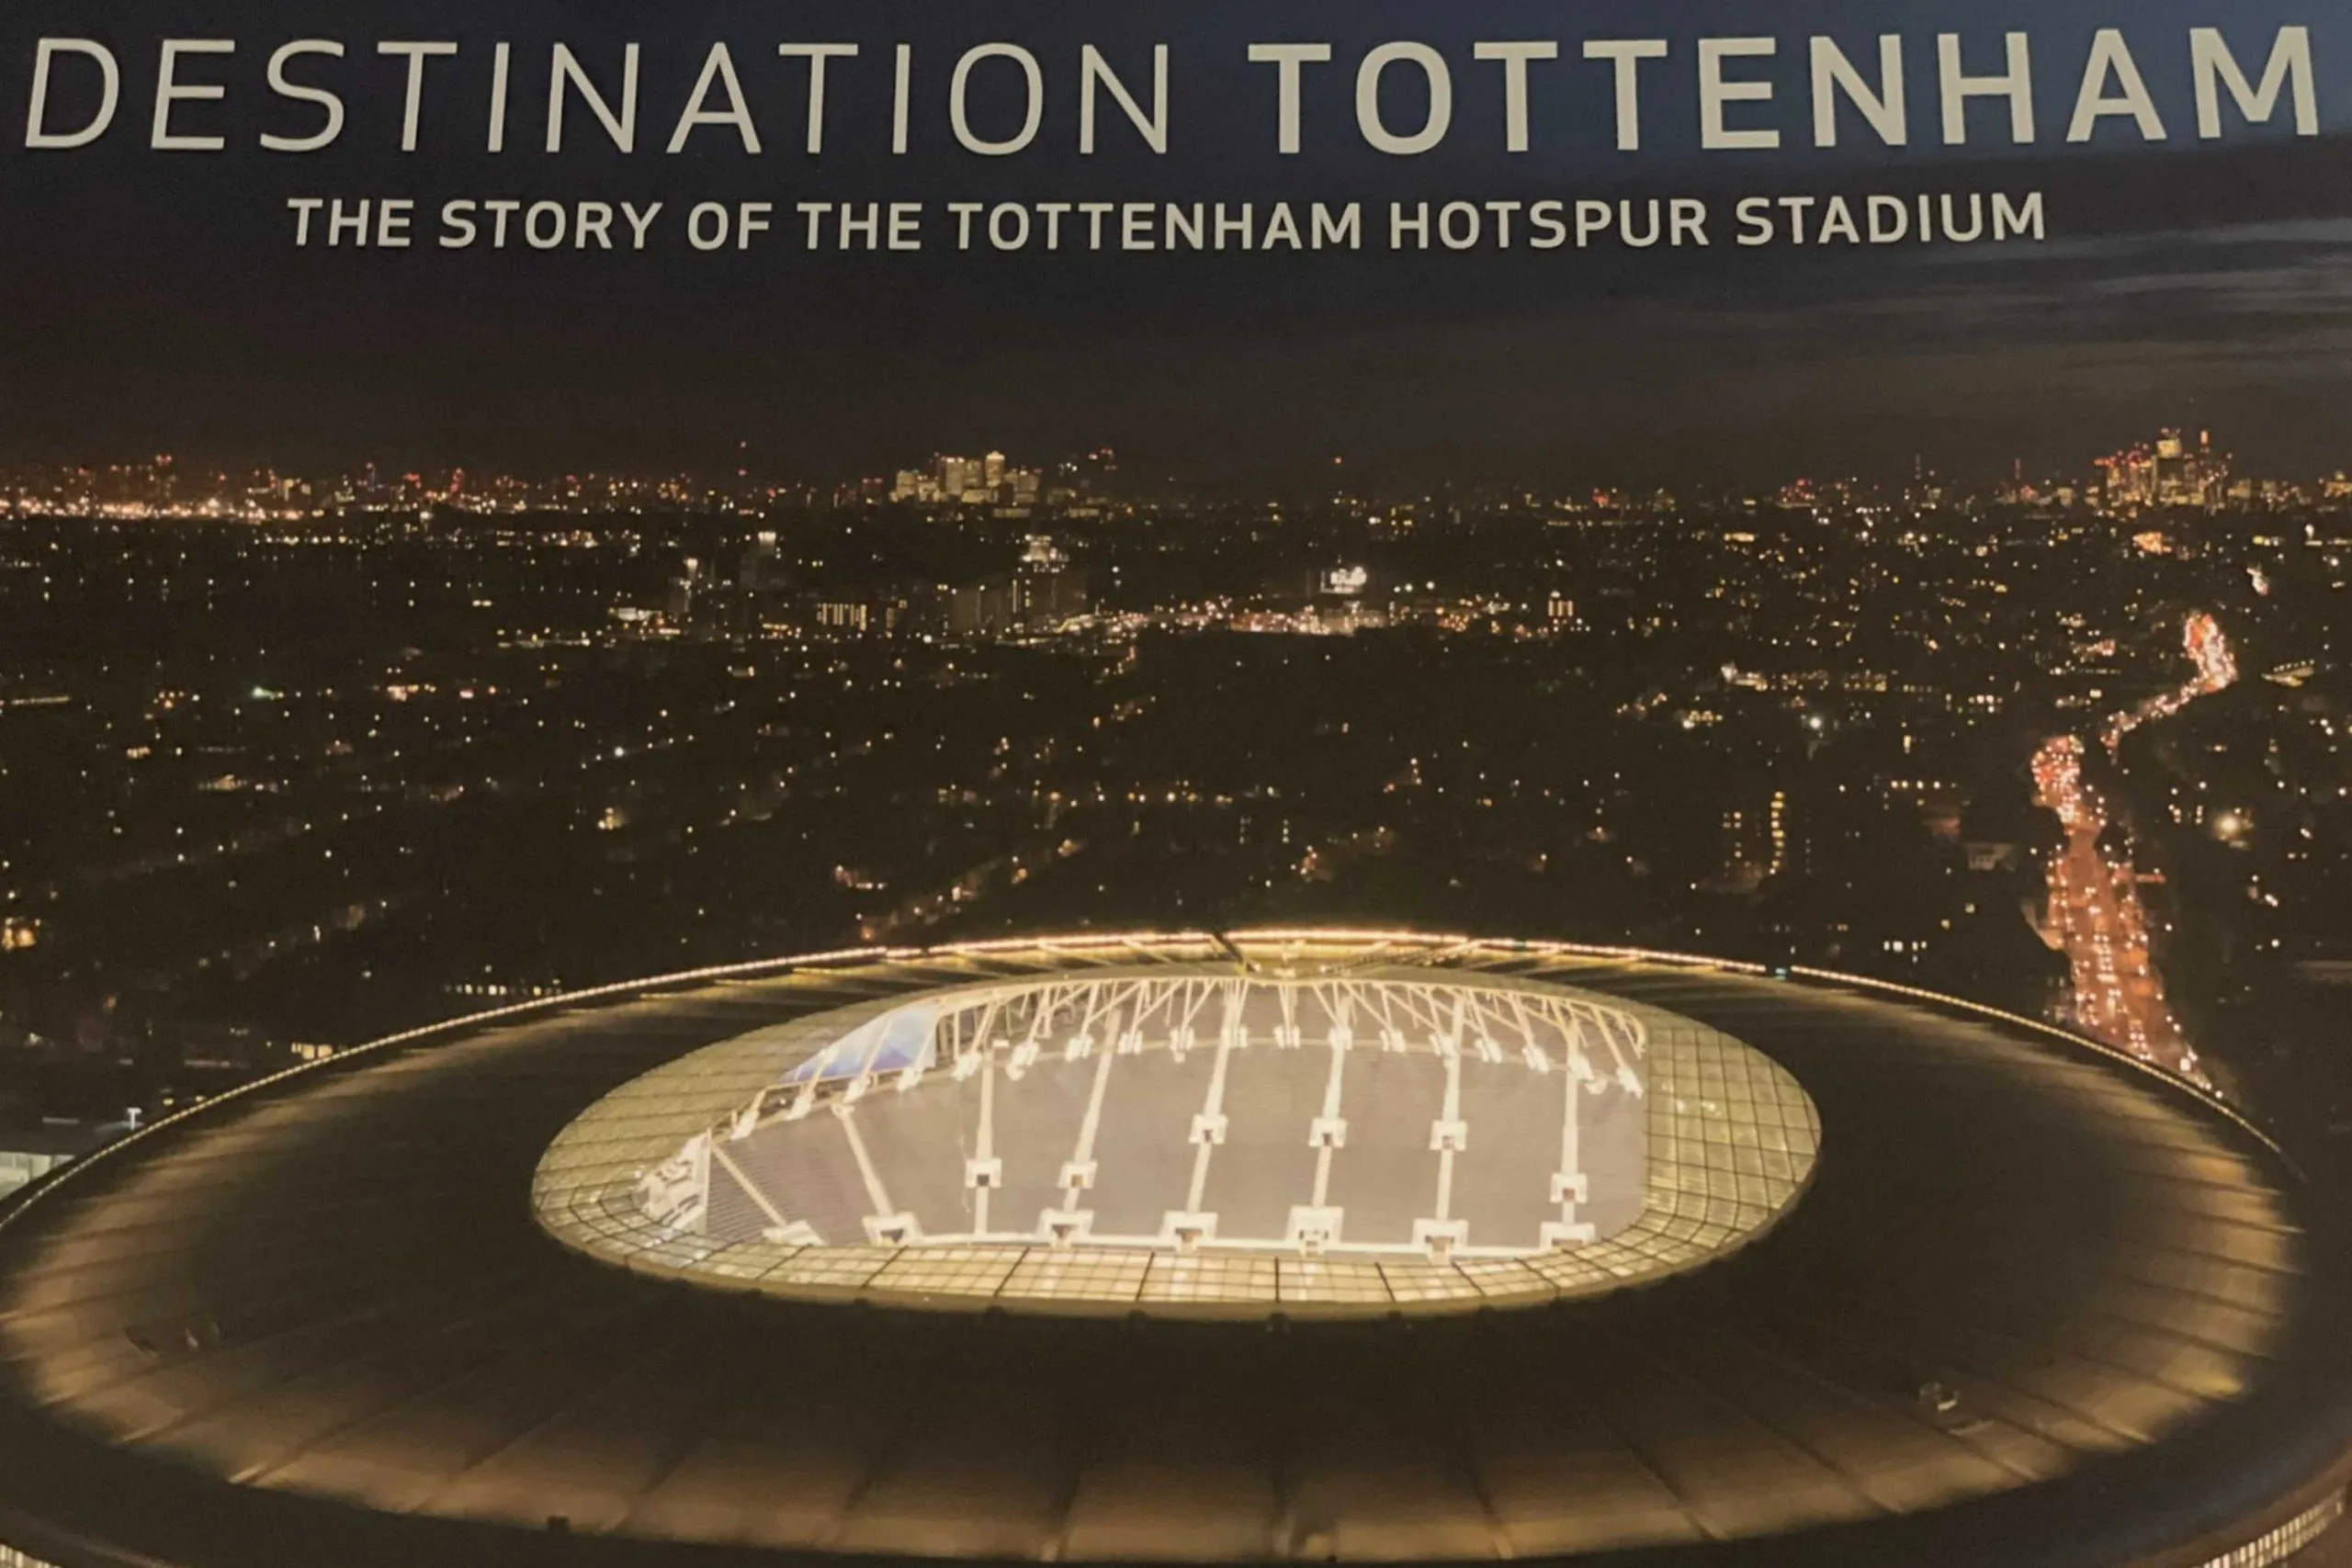 Book on Tottenham Hotspur Stadium (1)